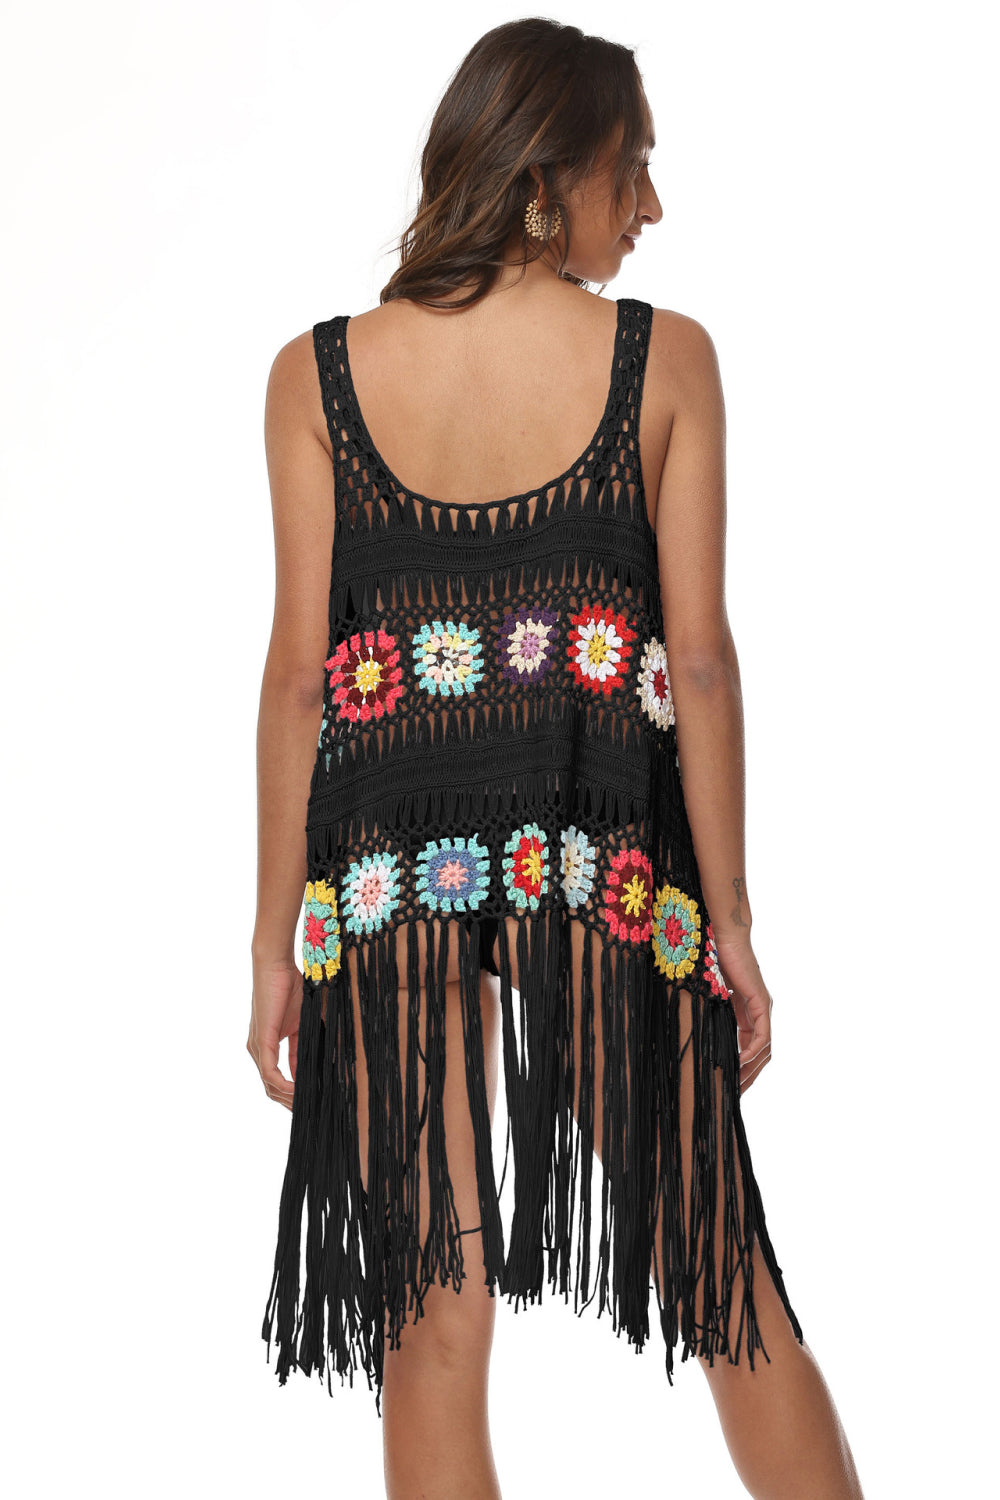 Boho Crocheted Fringe Sleeveless Cover-Up choice of colors